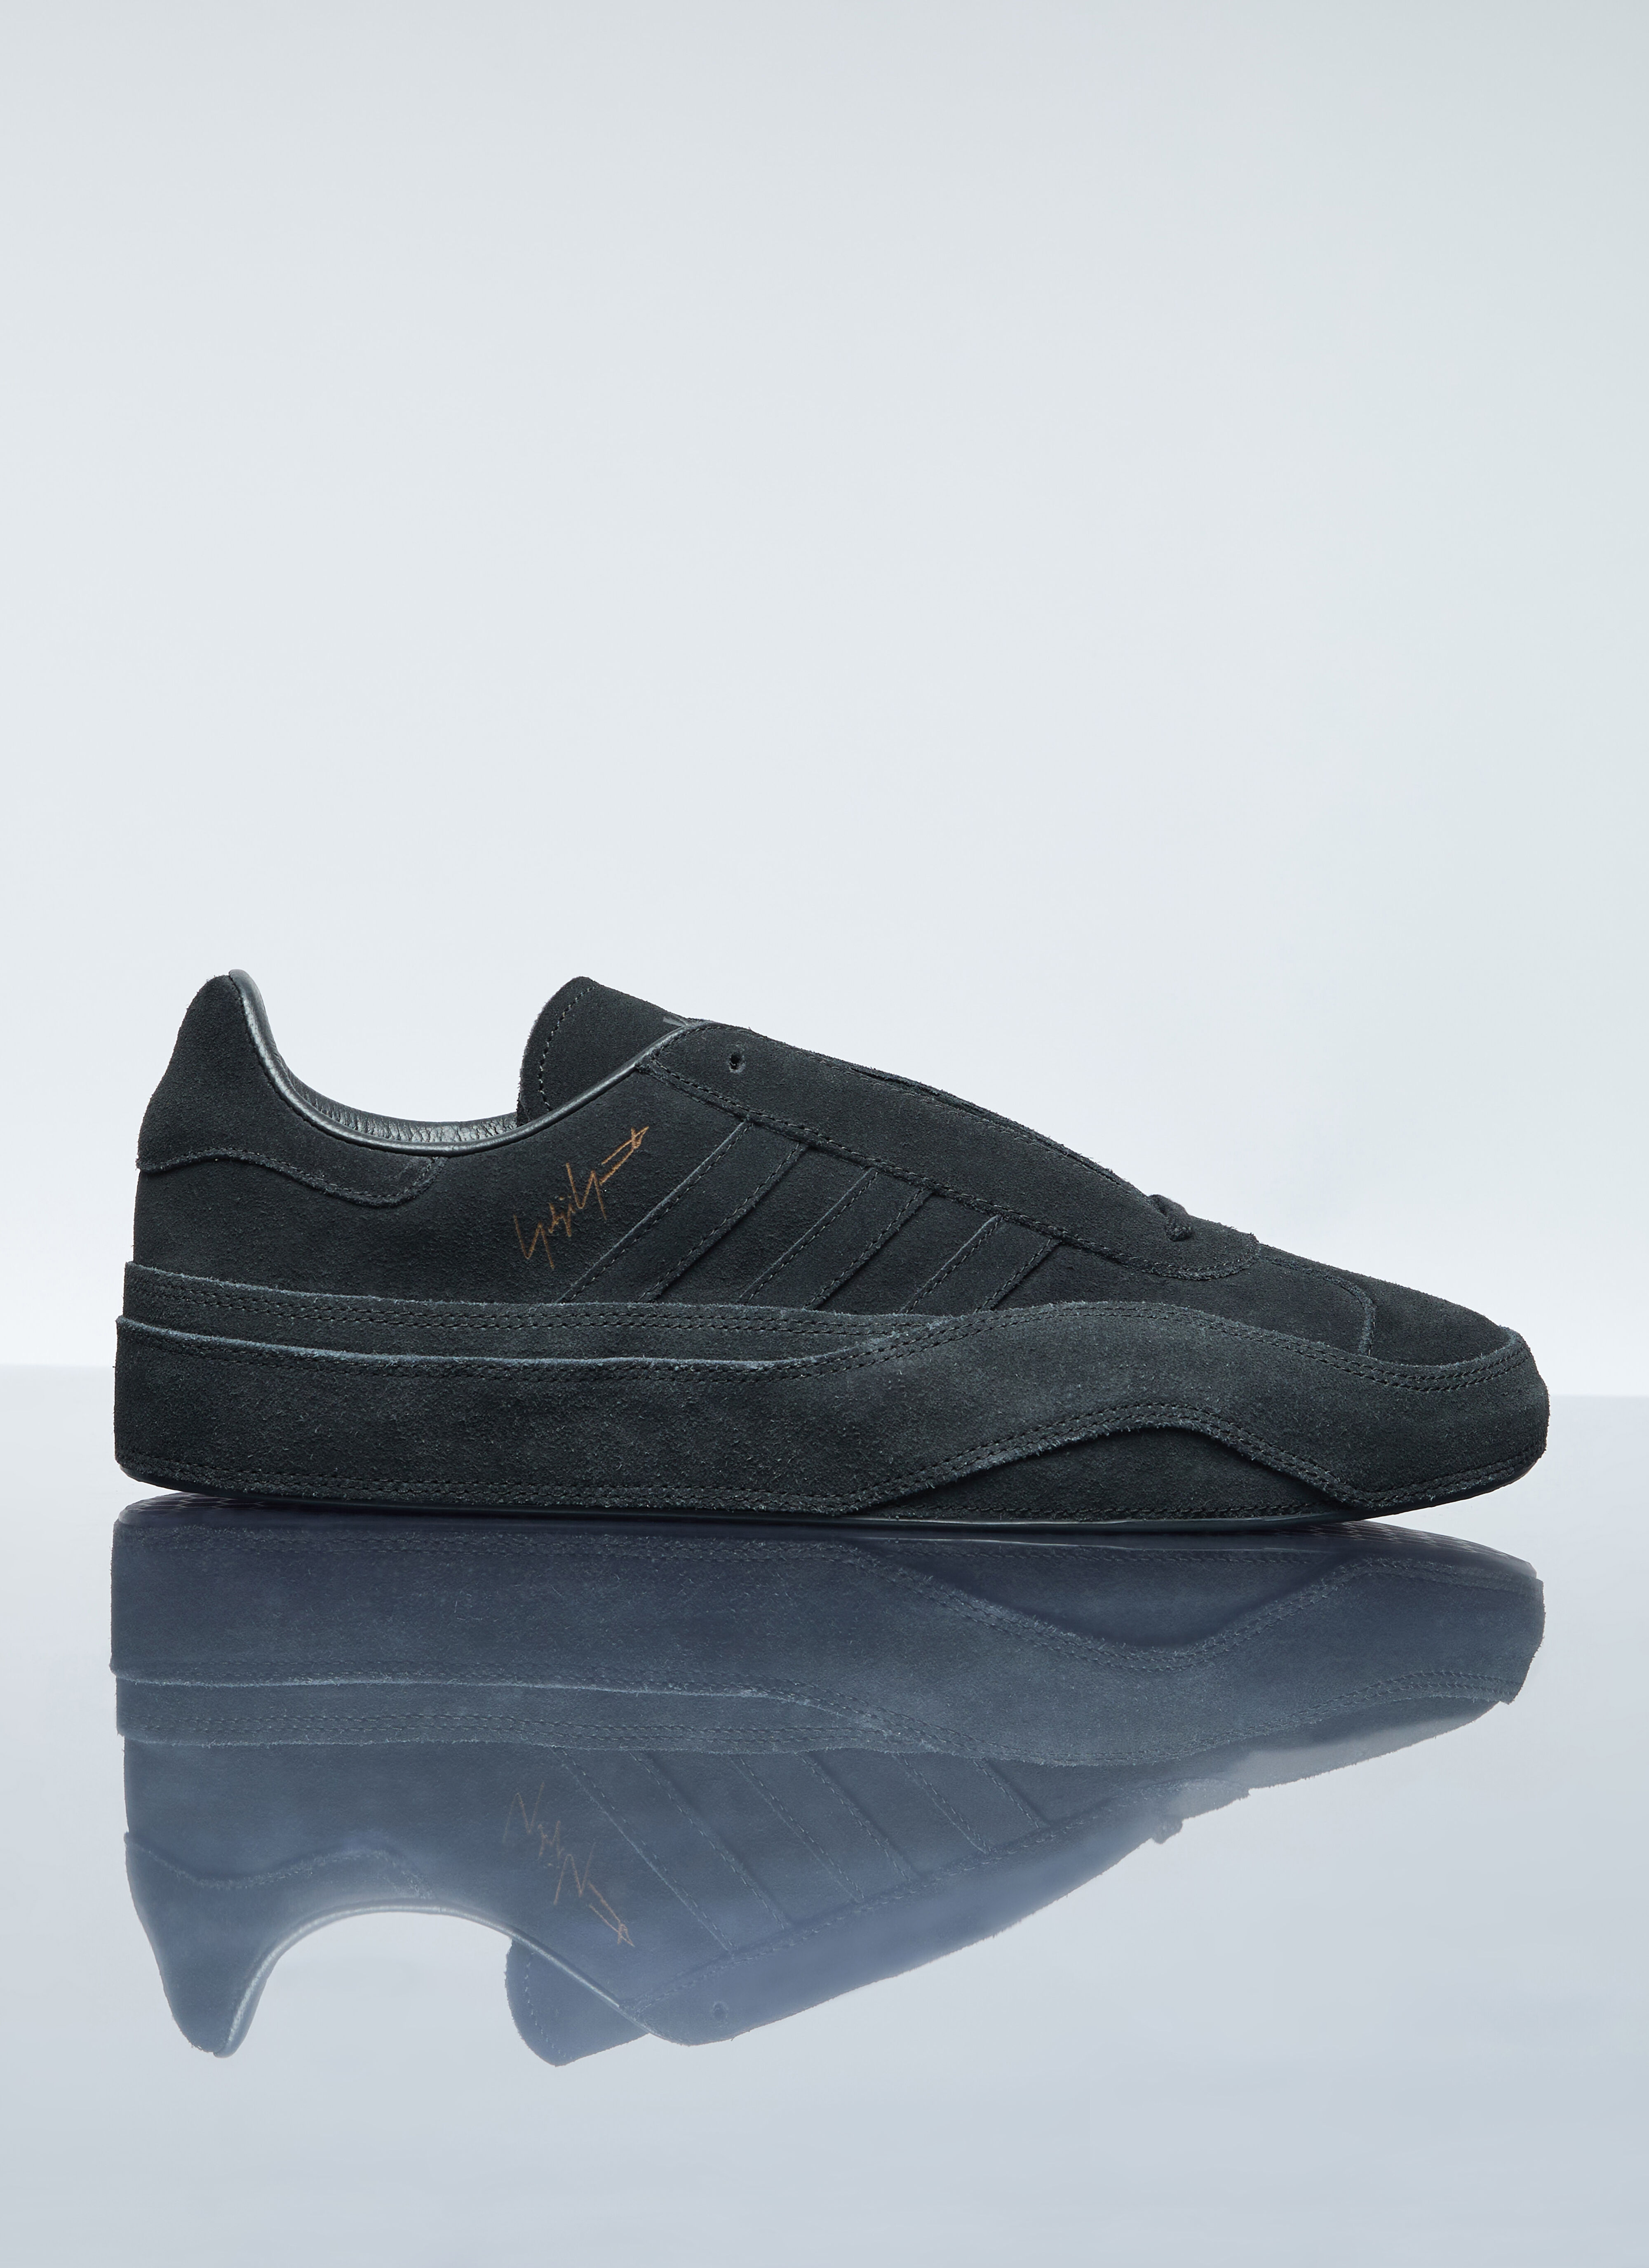 Y-3 Y-3 Suede Gazelle Sneakers Black yyy0356010